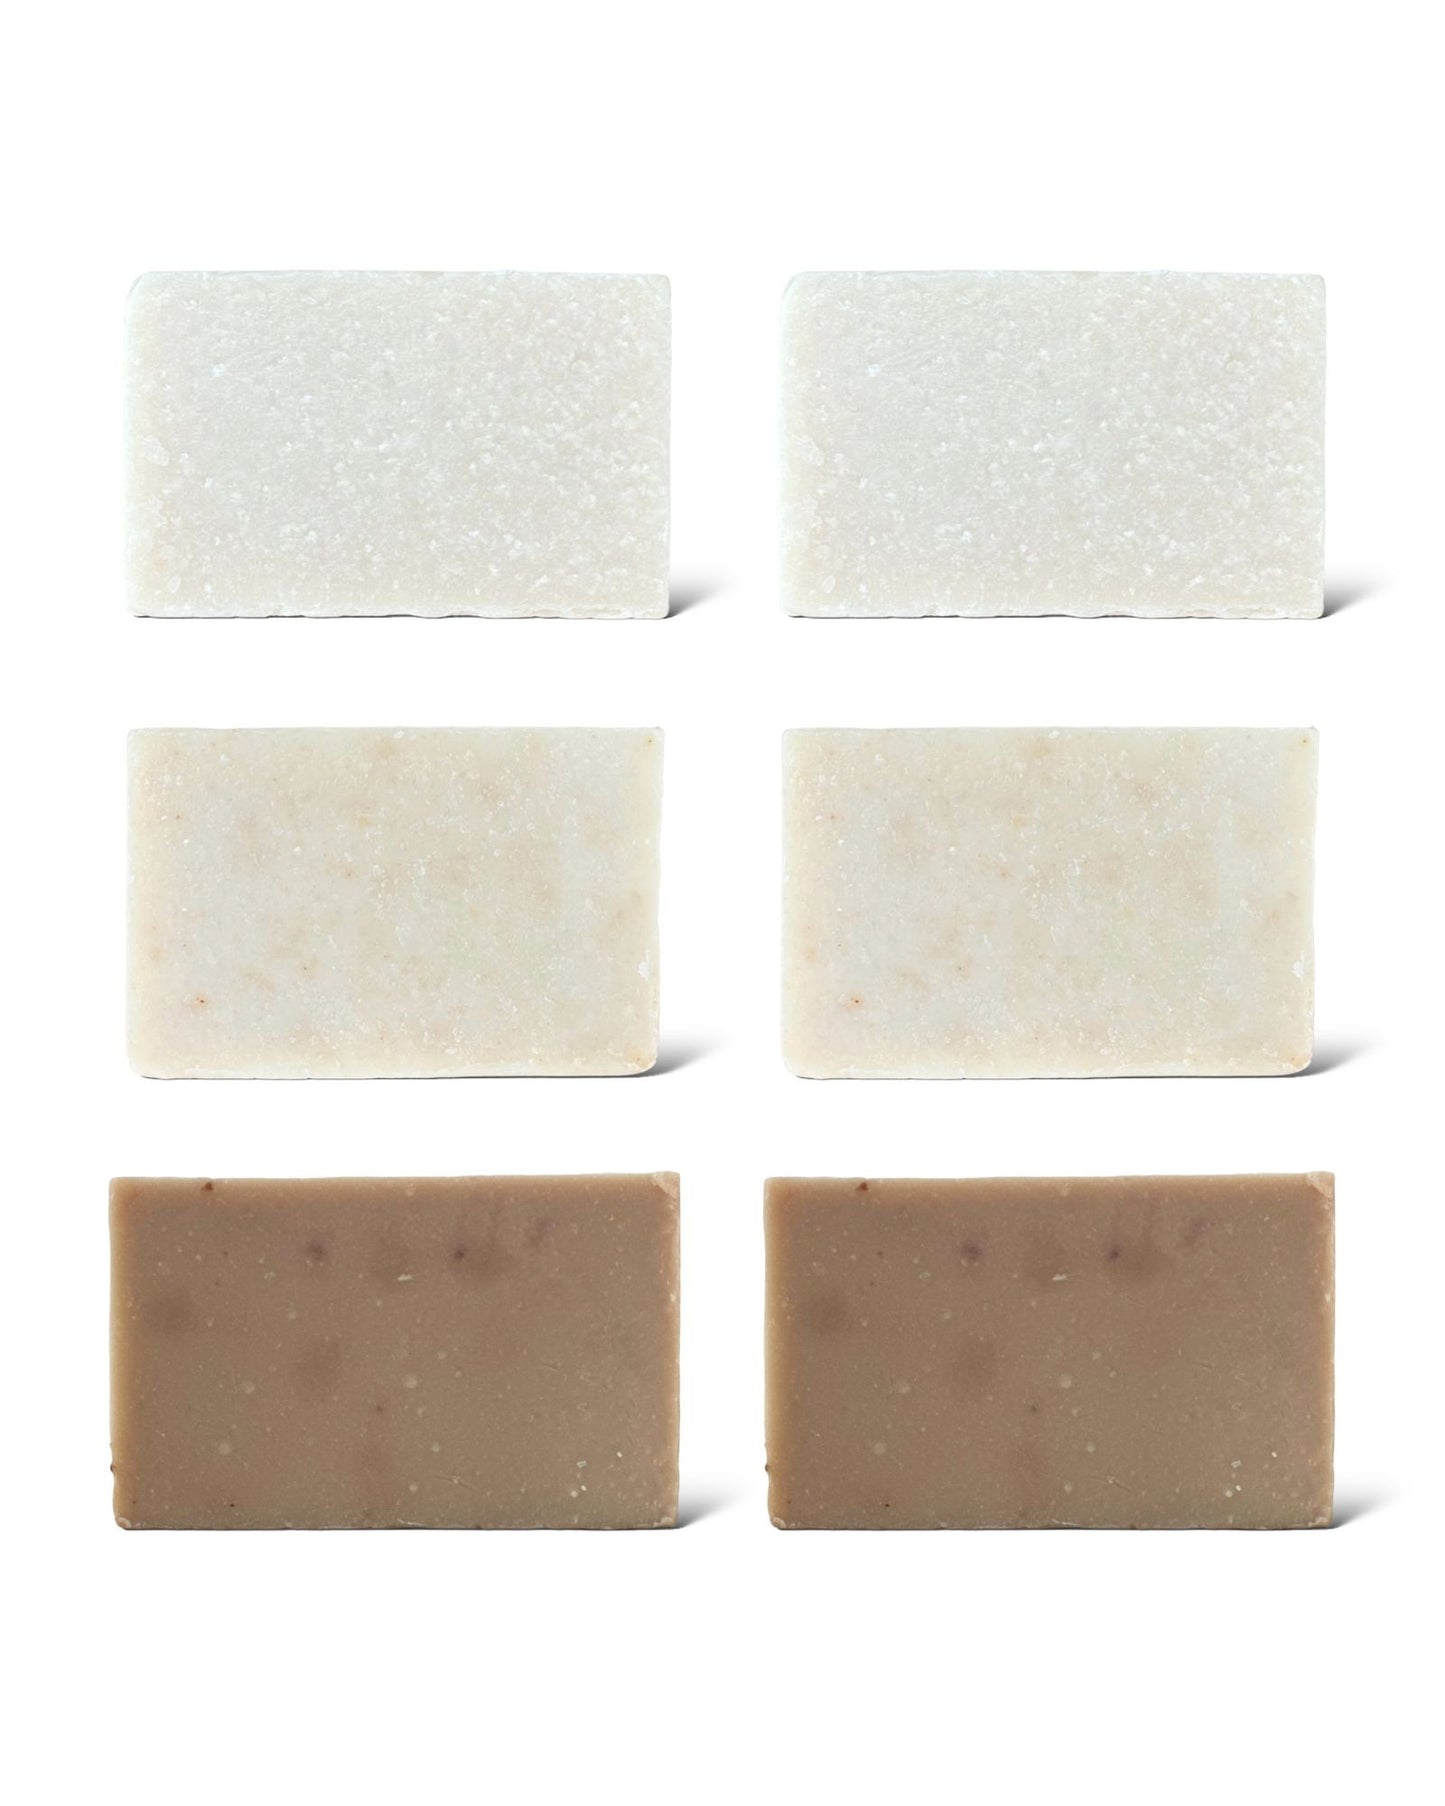 cold process bar soap - winter care bundle